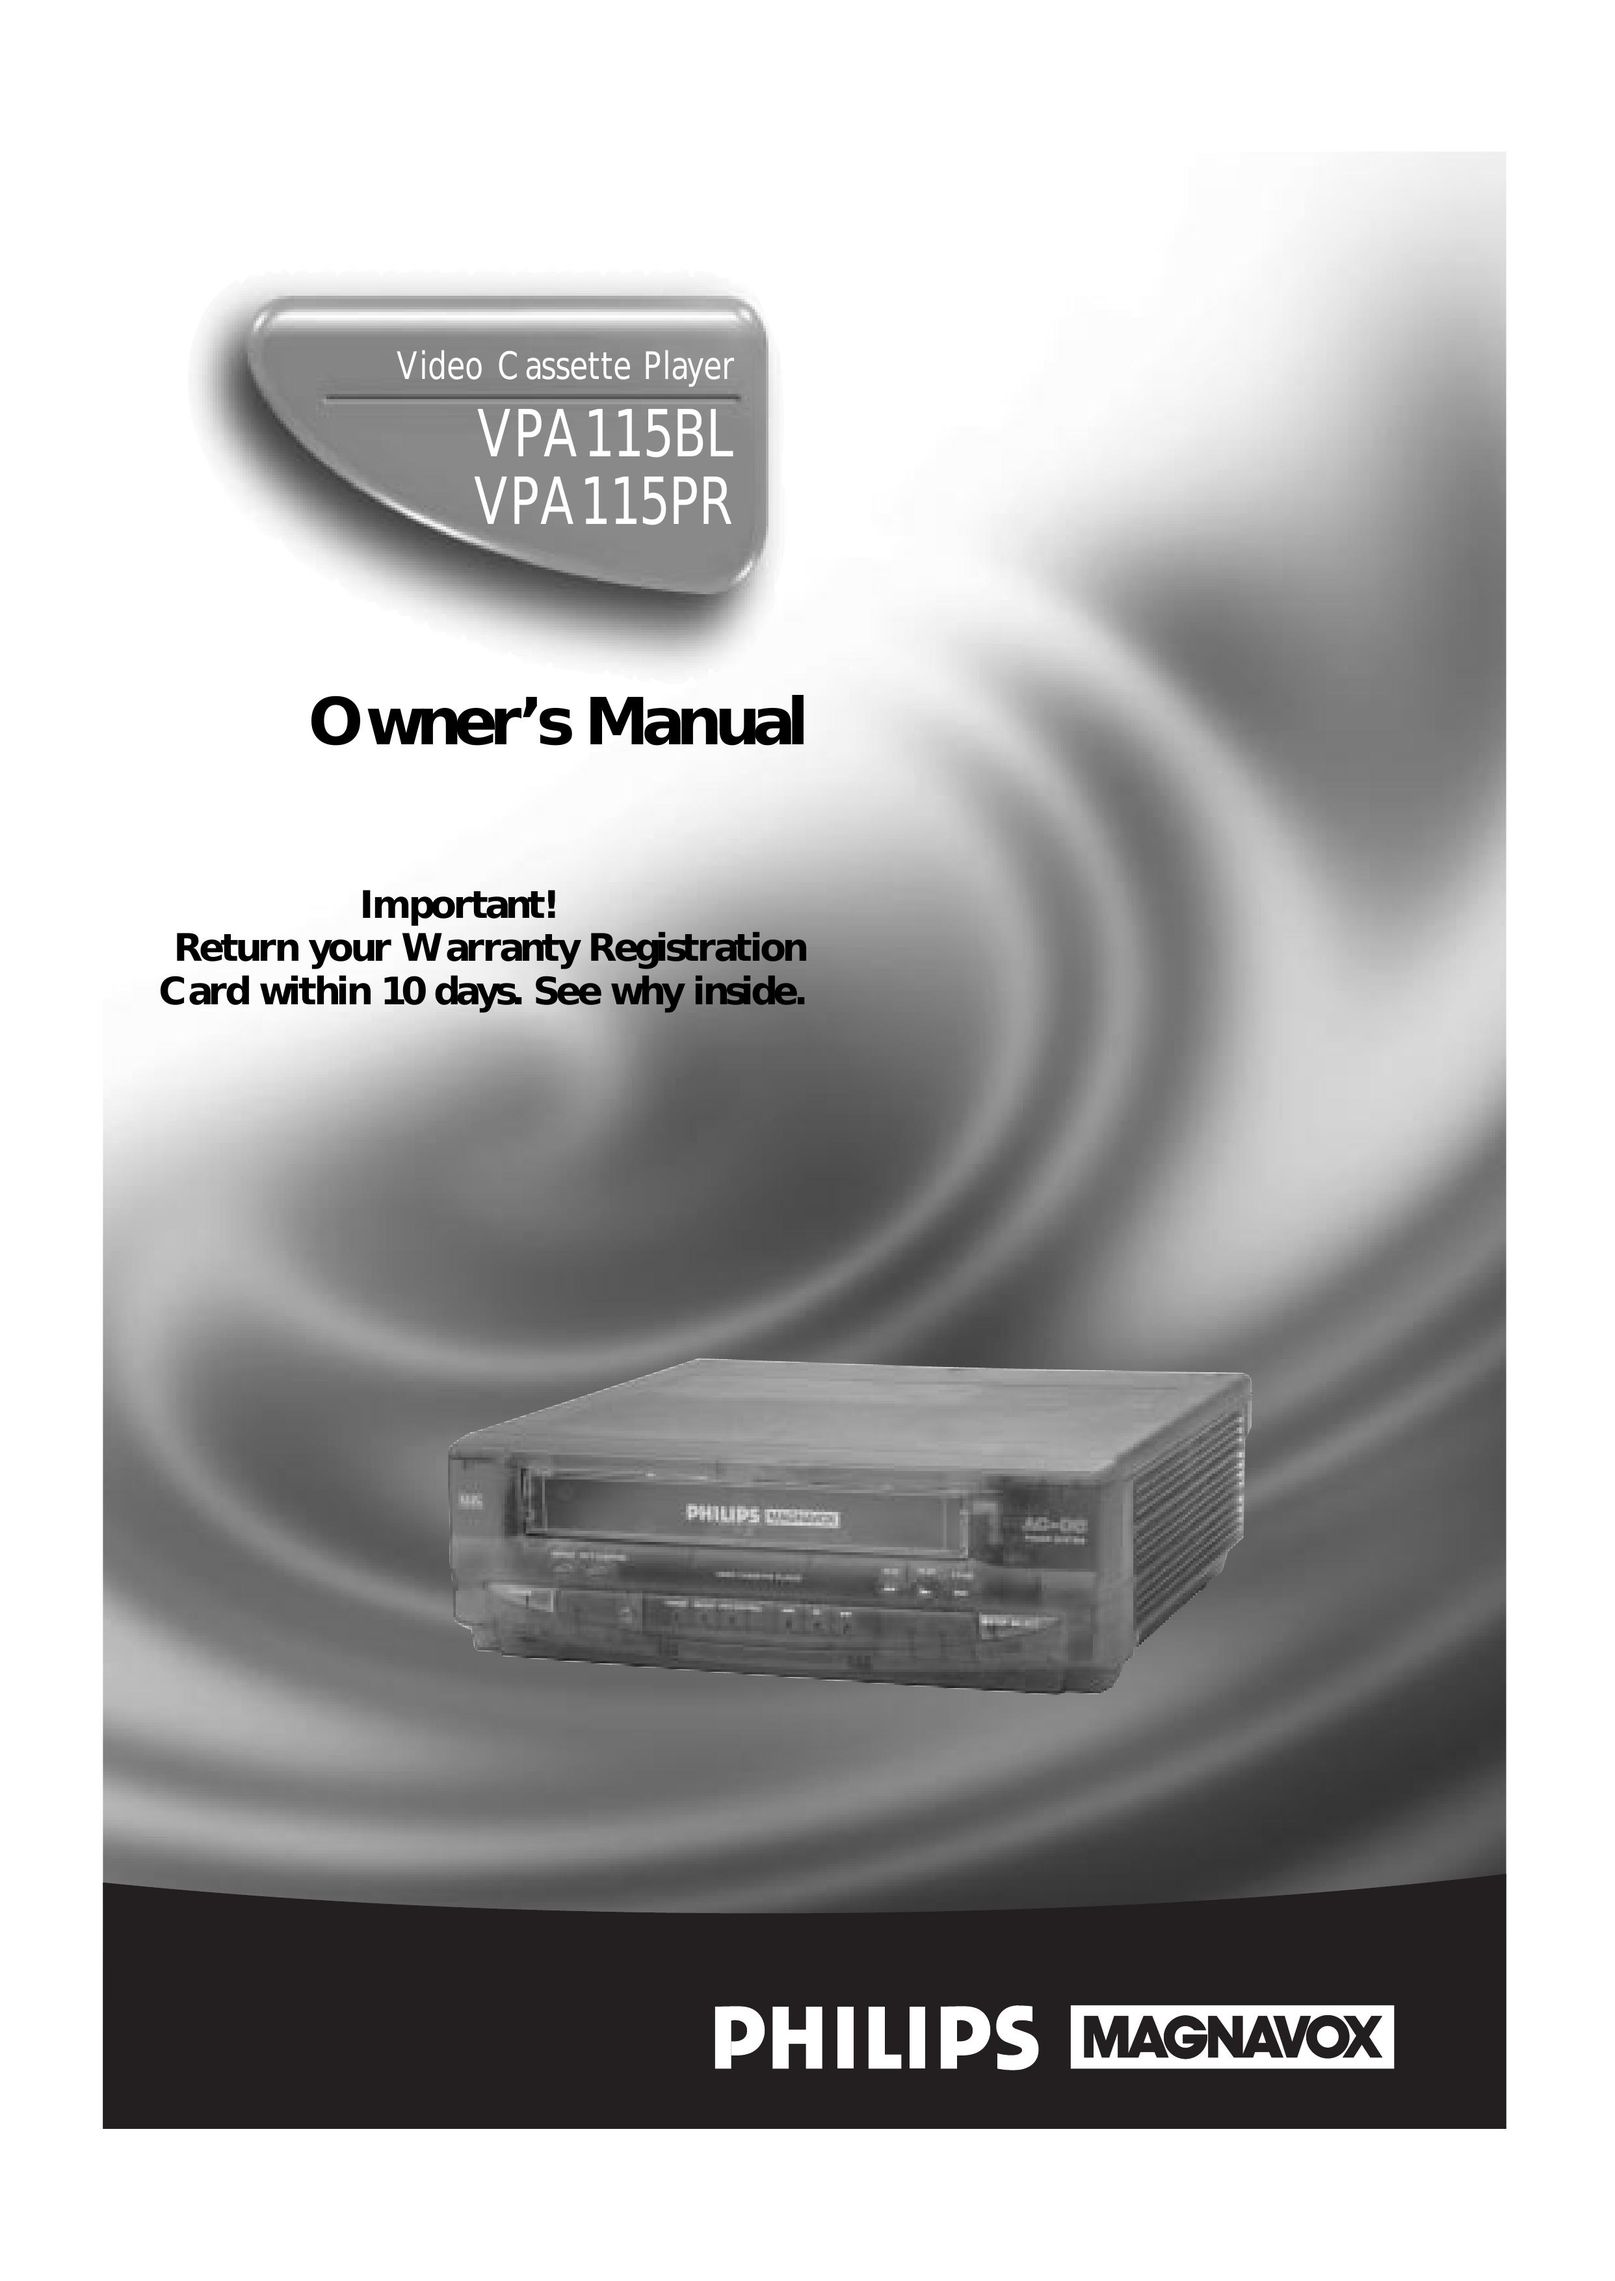 Magnavox VPA115PR Cassette Player User Manual